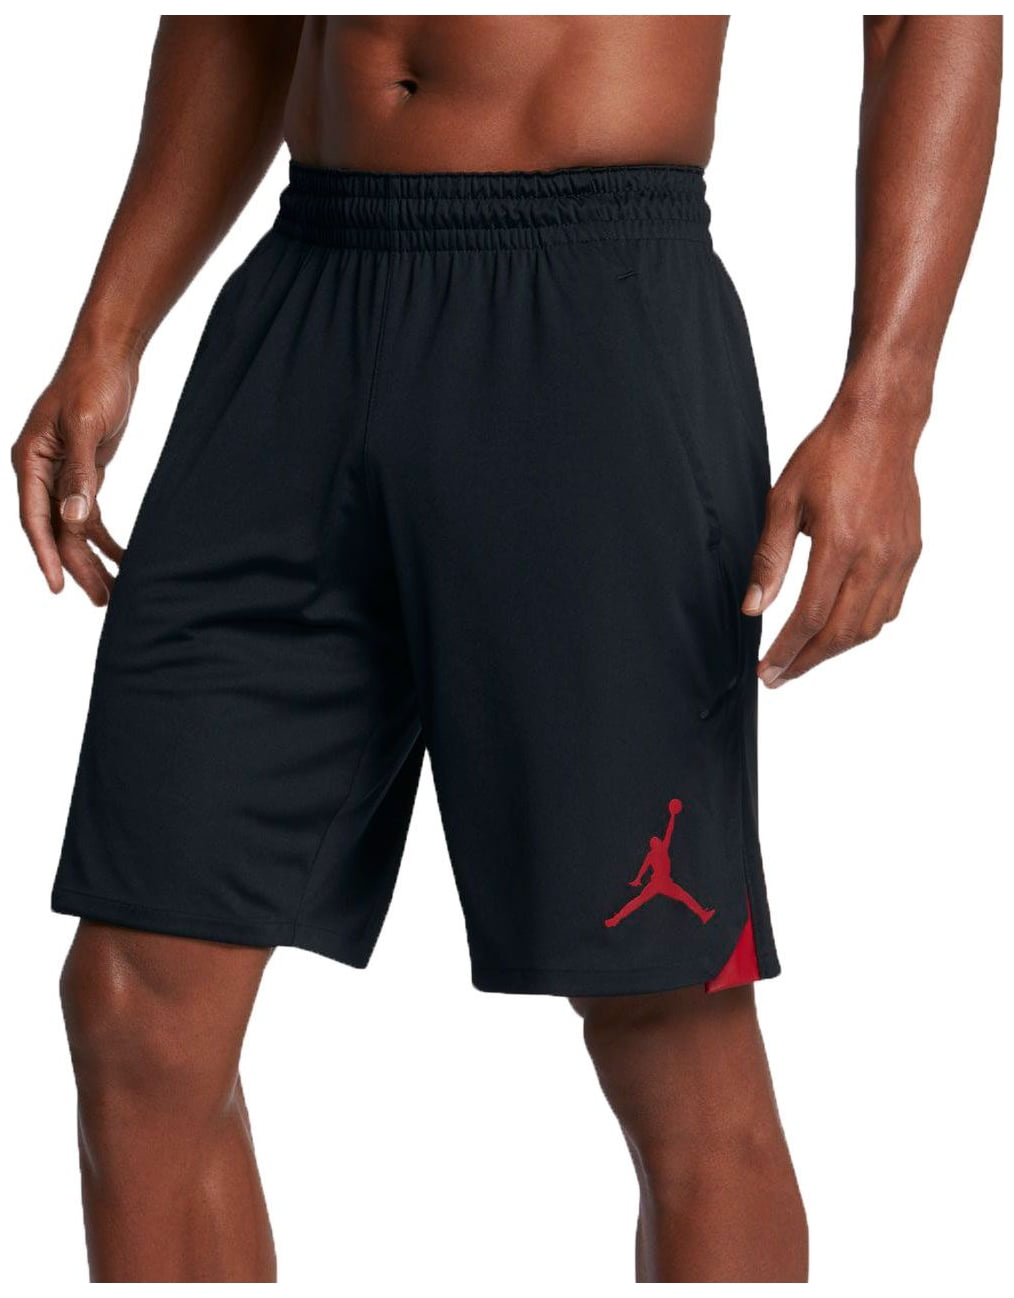 Nike 849143-010 : Mens 23 Knit Shorts Black/Red - Walmart.com